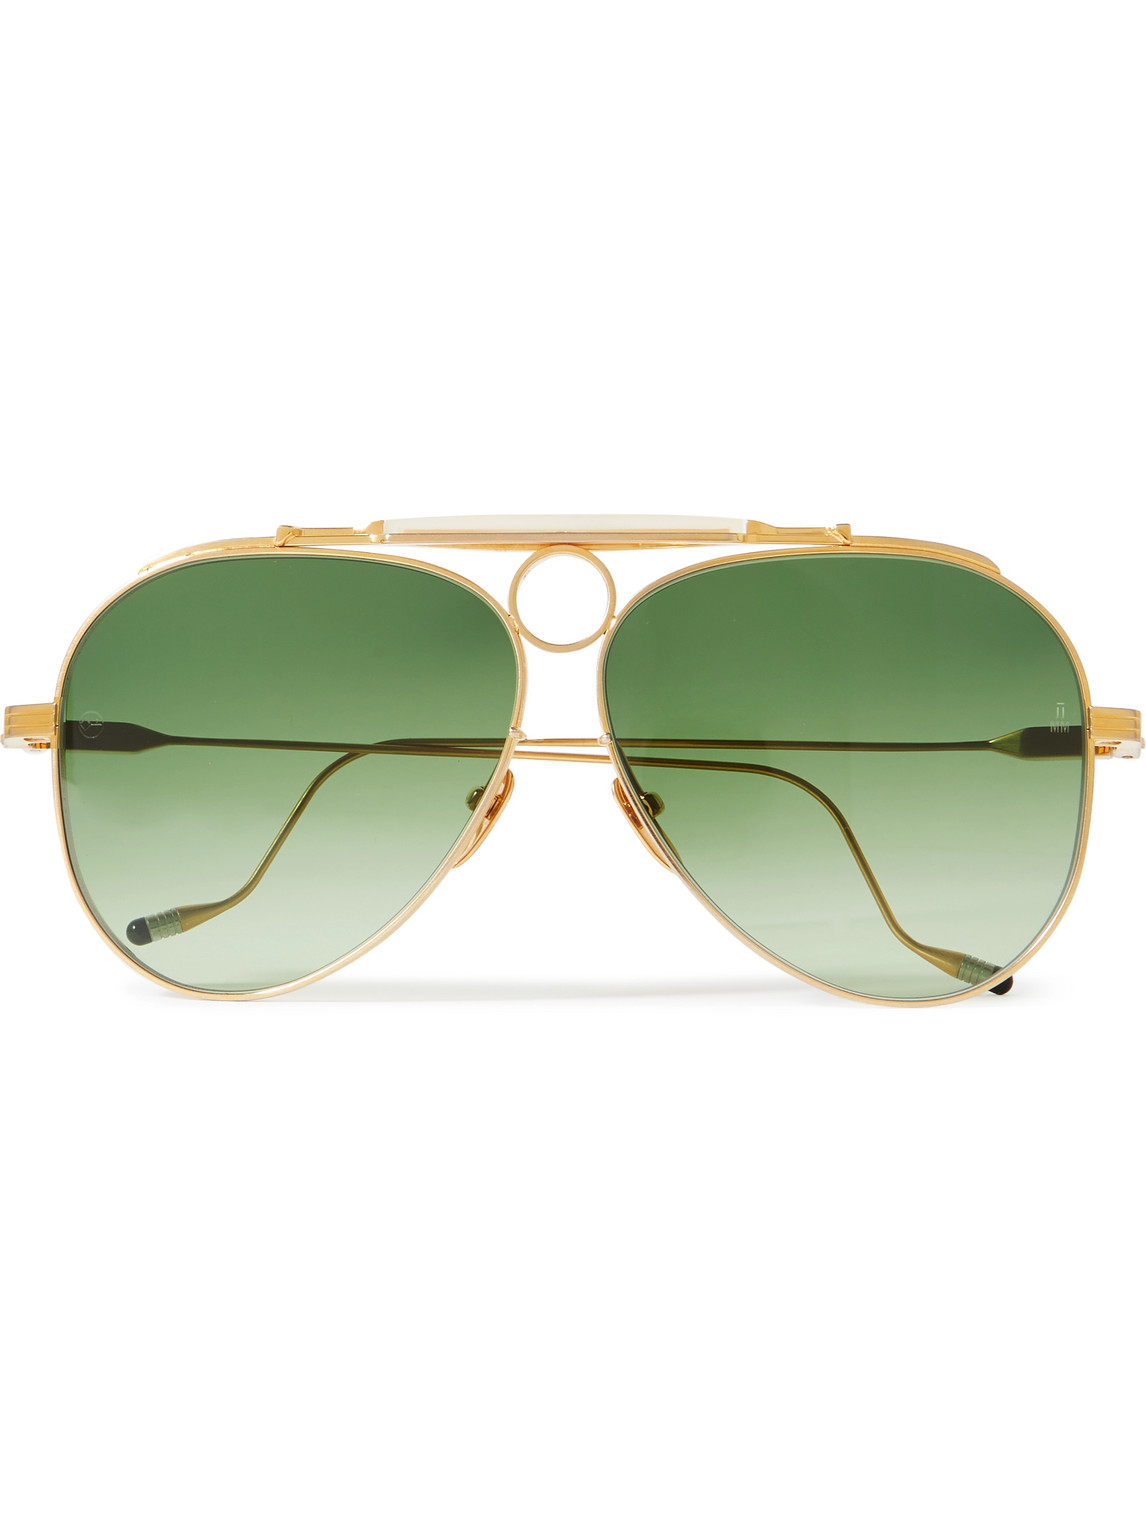 Jacques Marie Mage Diamond Cross Ranch Aviator-style Gold-tone Sunglasses